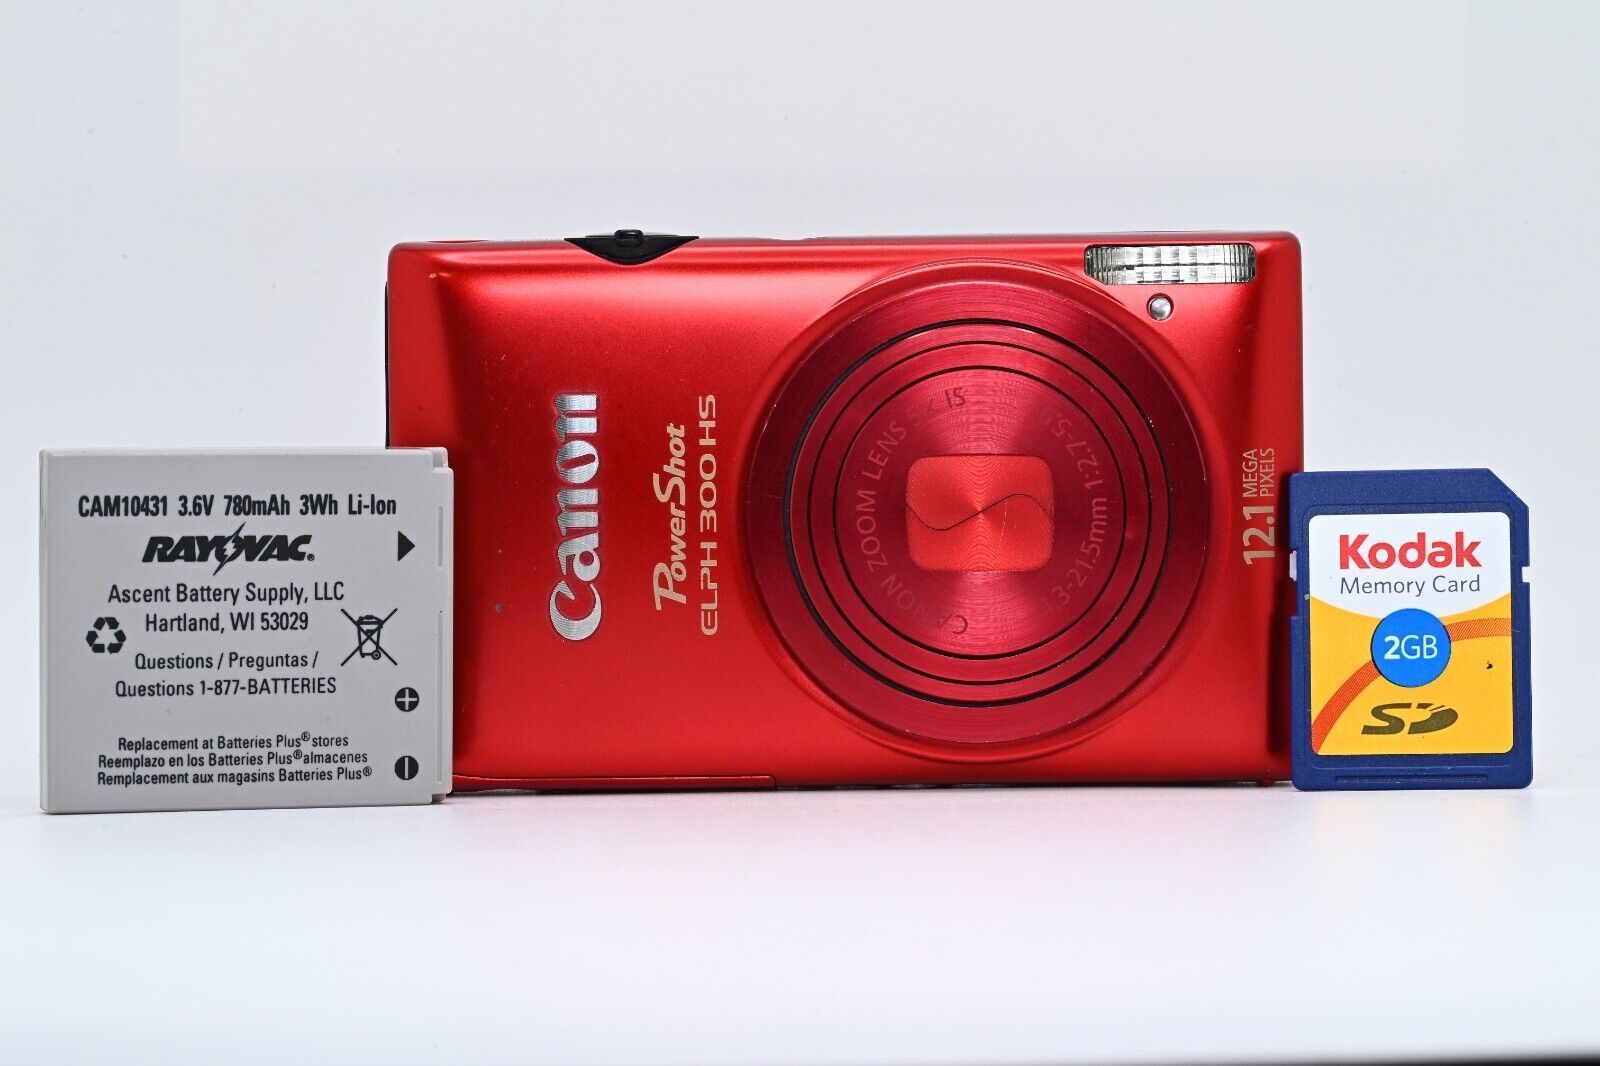 [NEAR MINT] Canon PowerShot ELPH 300 HS | 12.1MP Digital Camera - RED